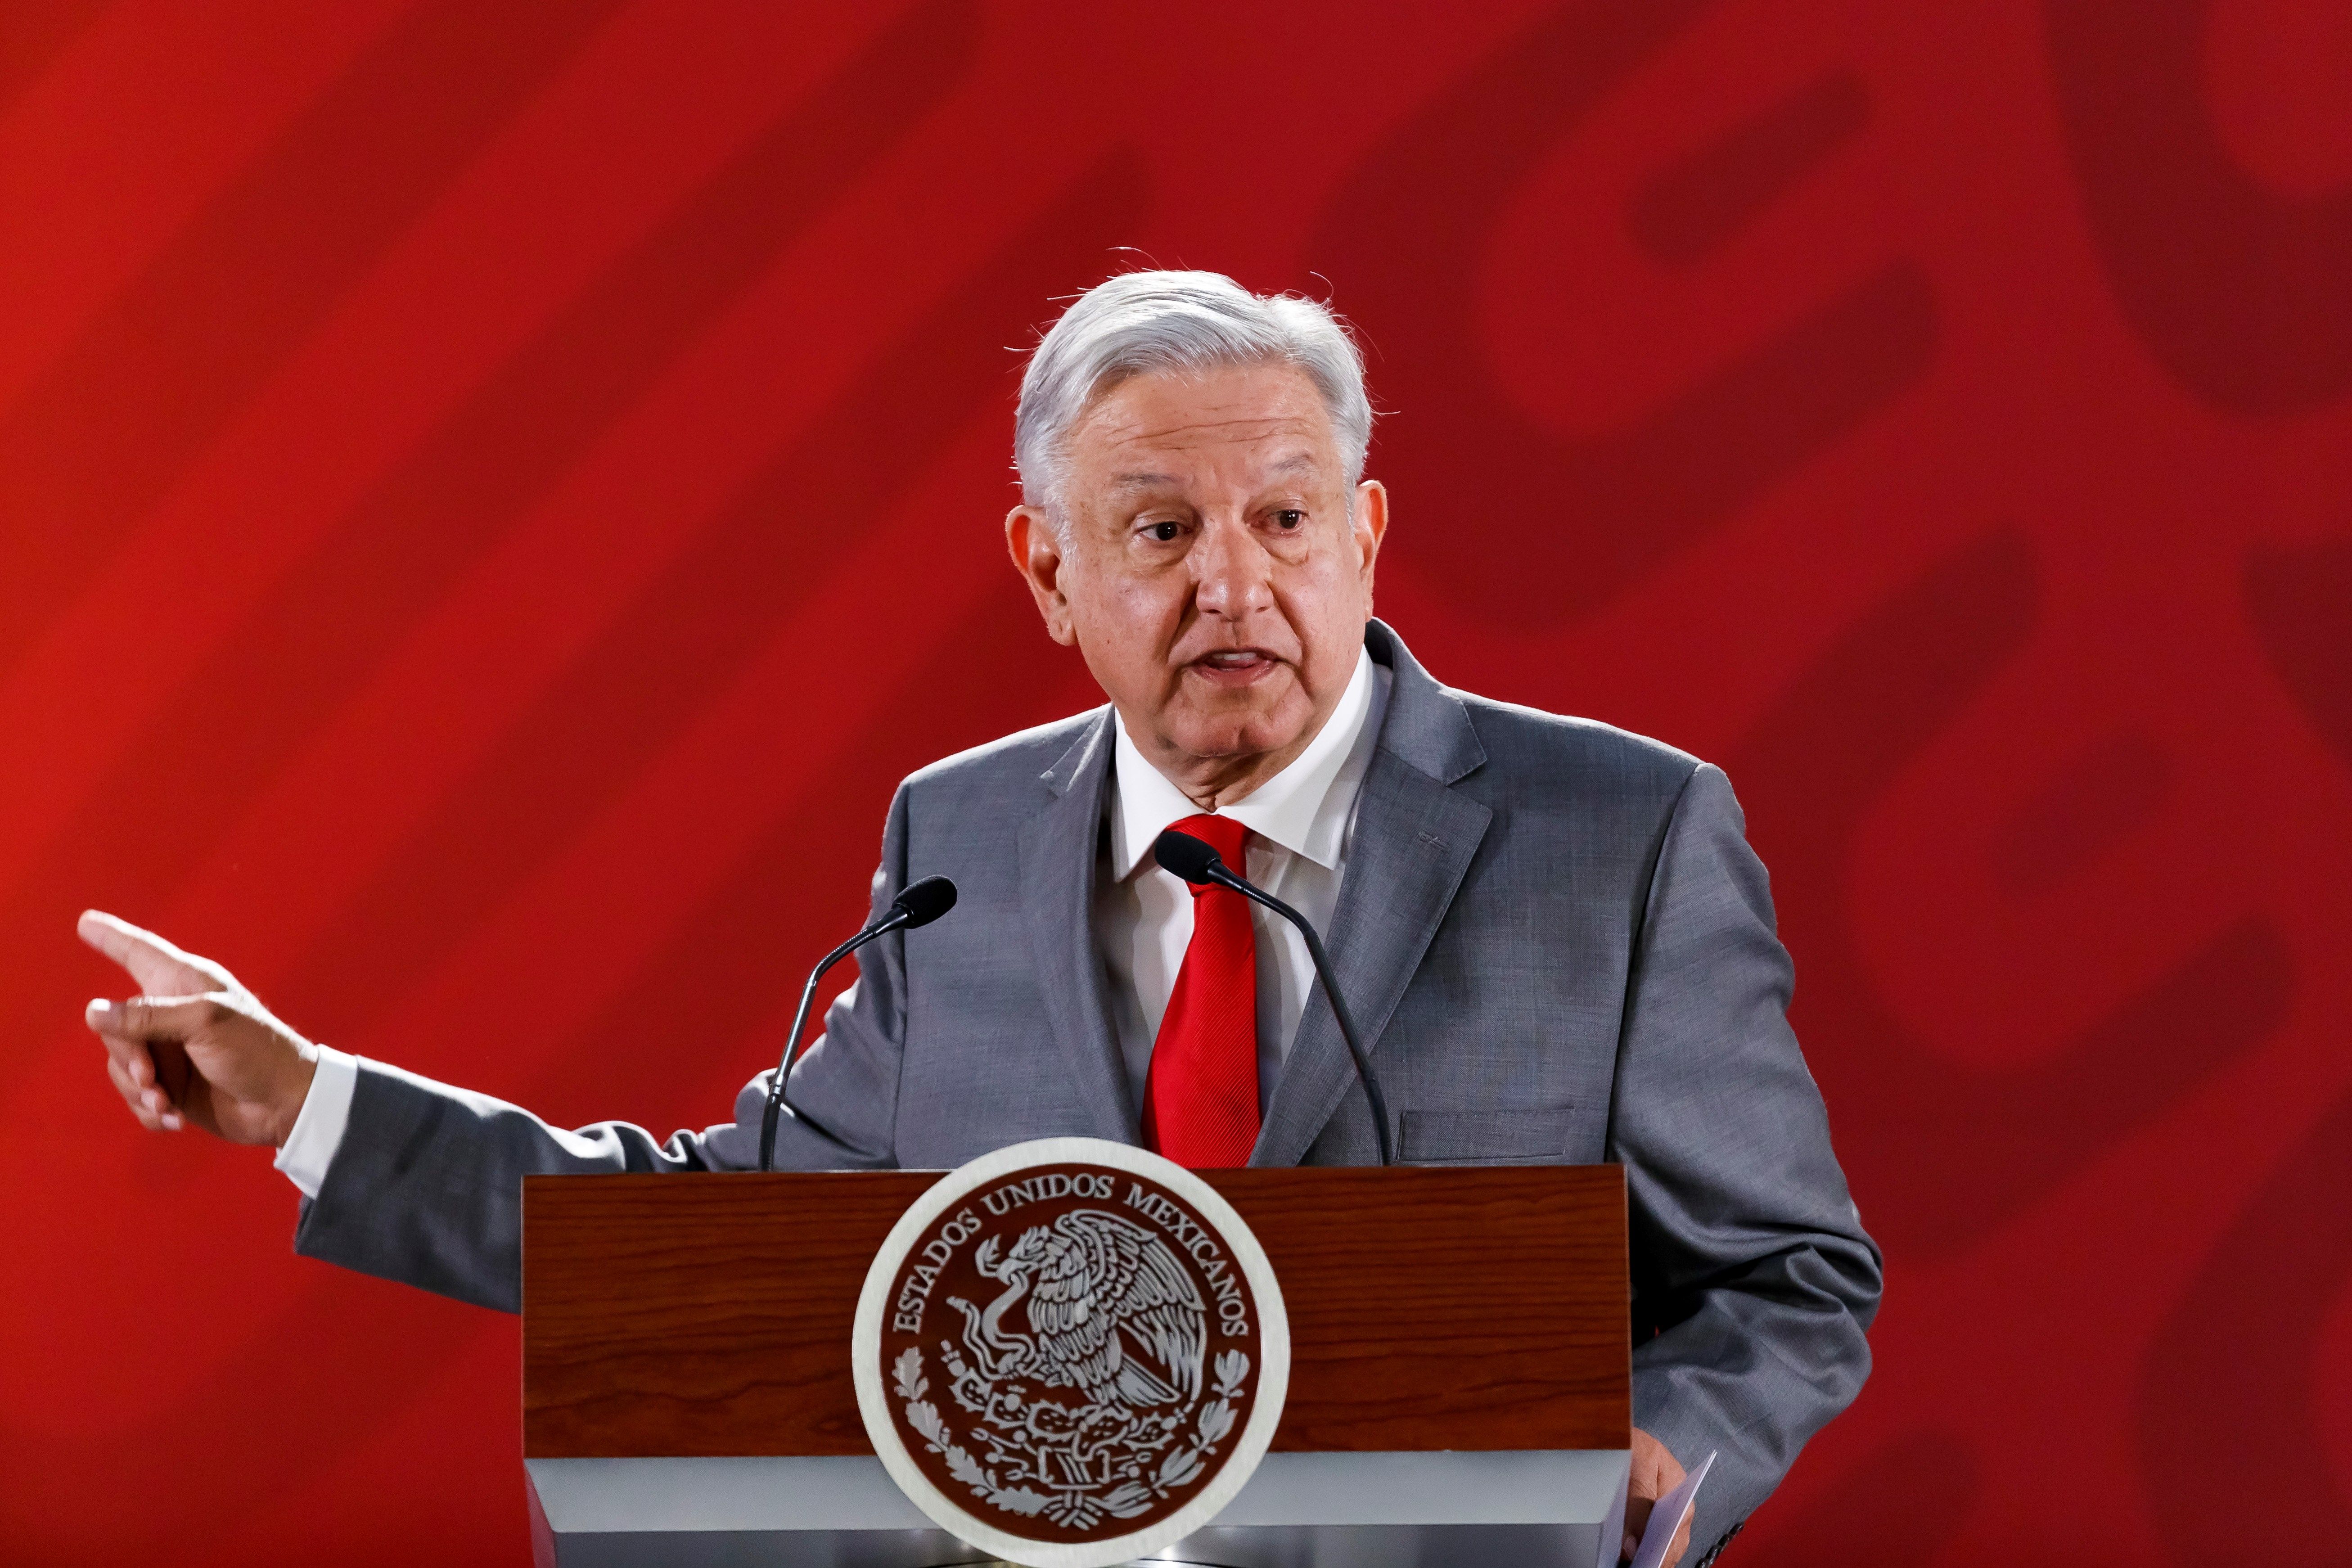  López Obrador acusa a firmas extranjeras de incumplir contratos “jugosísimos”